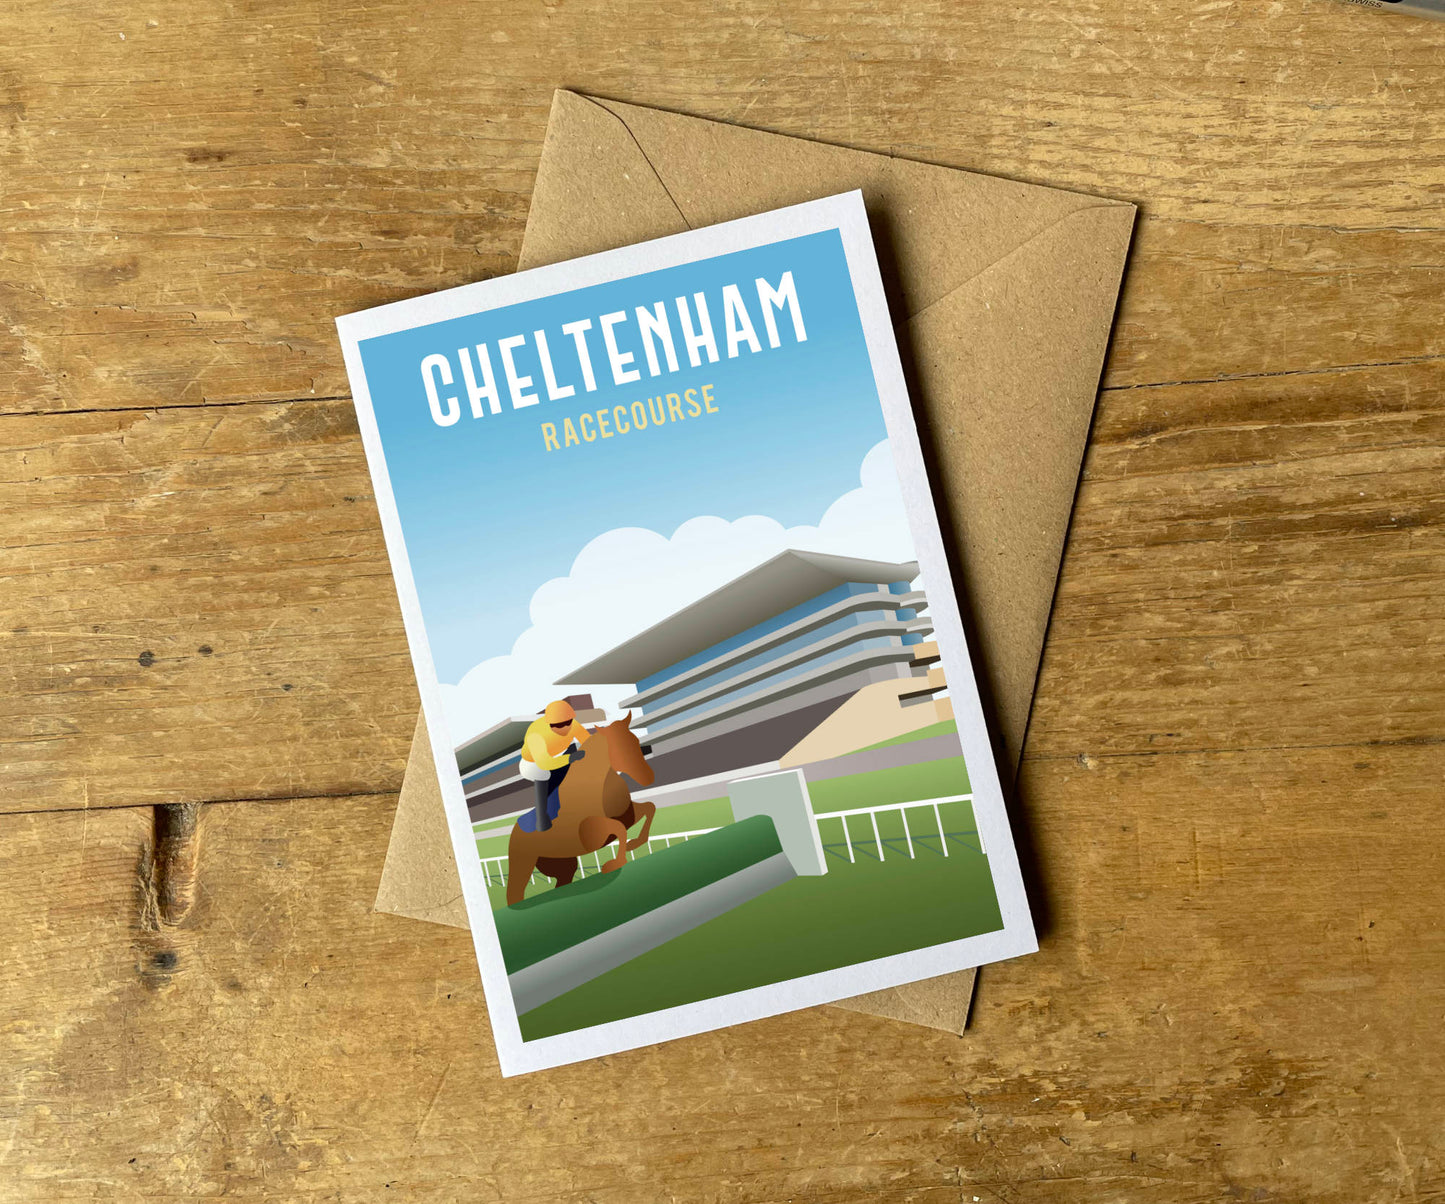 Cheltenham Racecourse Greeting Card on desk with envelope